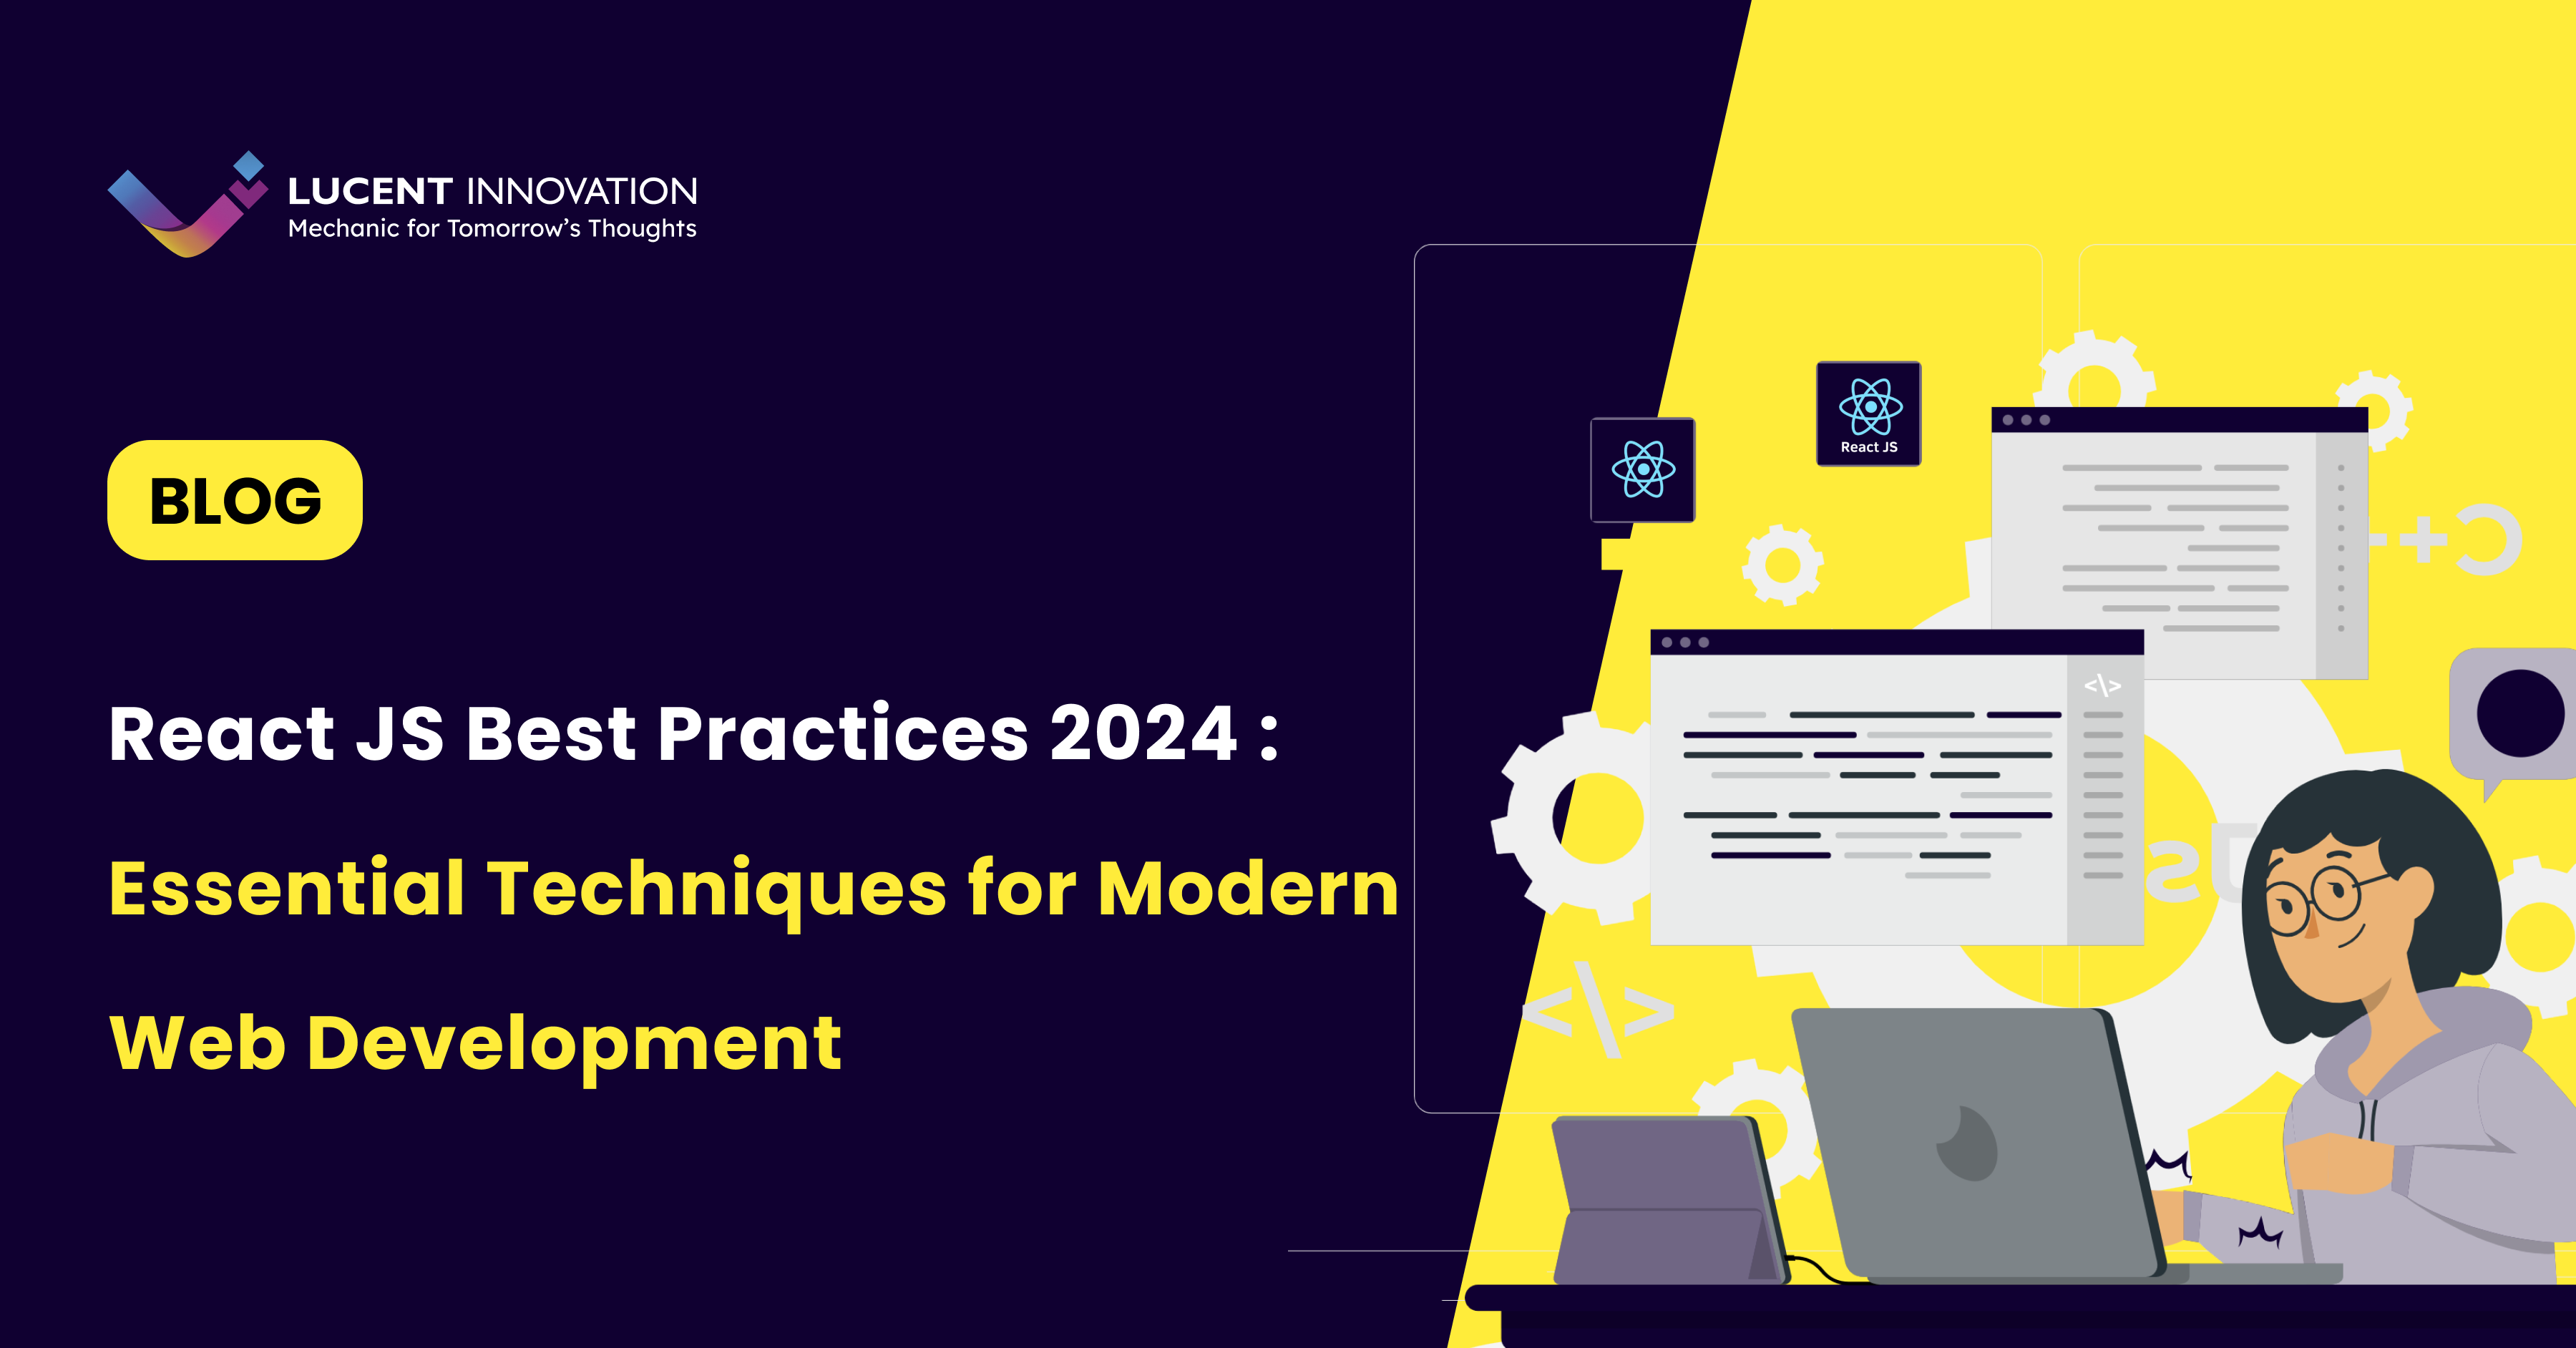 React JS Best Practices 2024: Essential Techniques for Modern Web Development